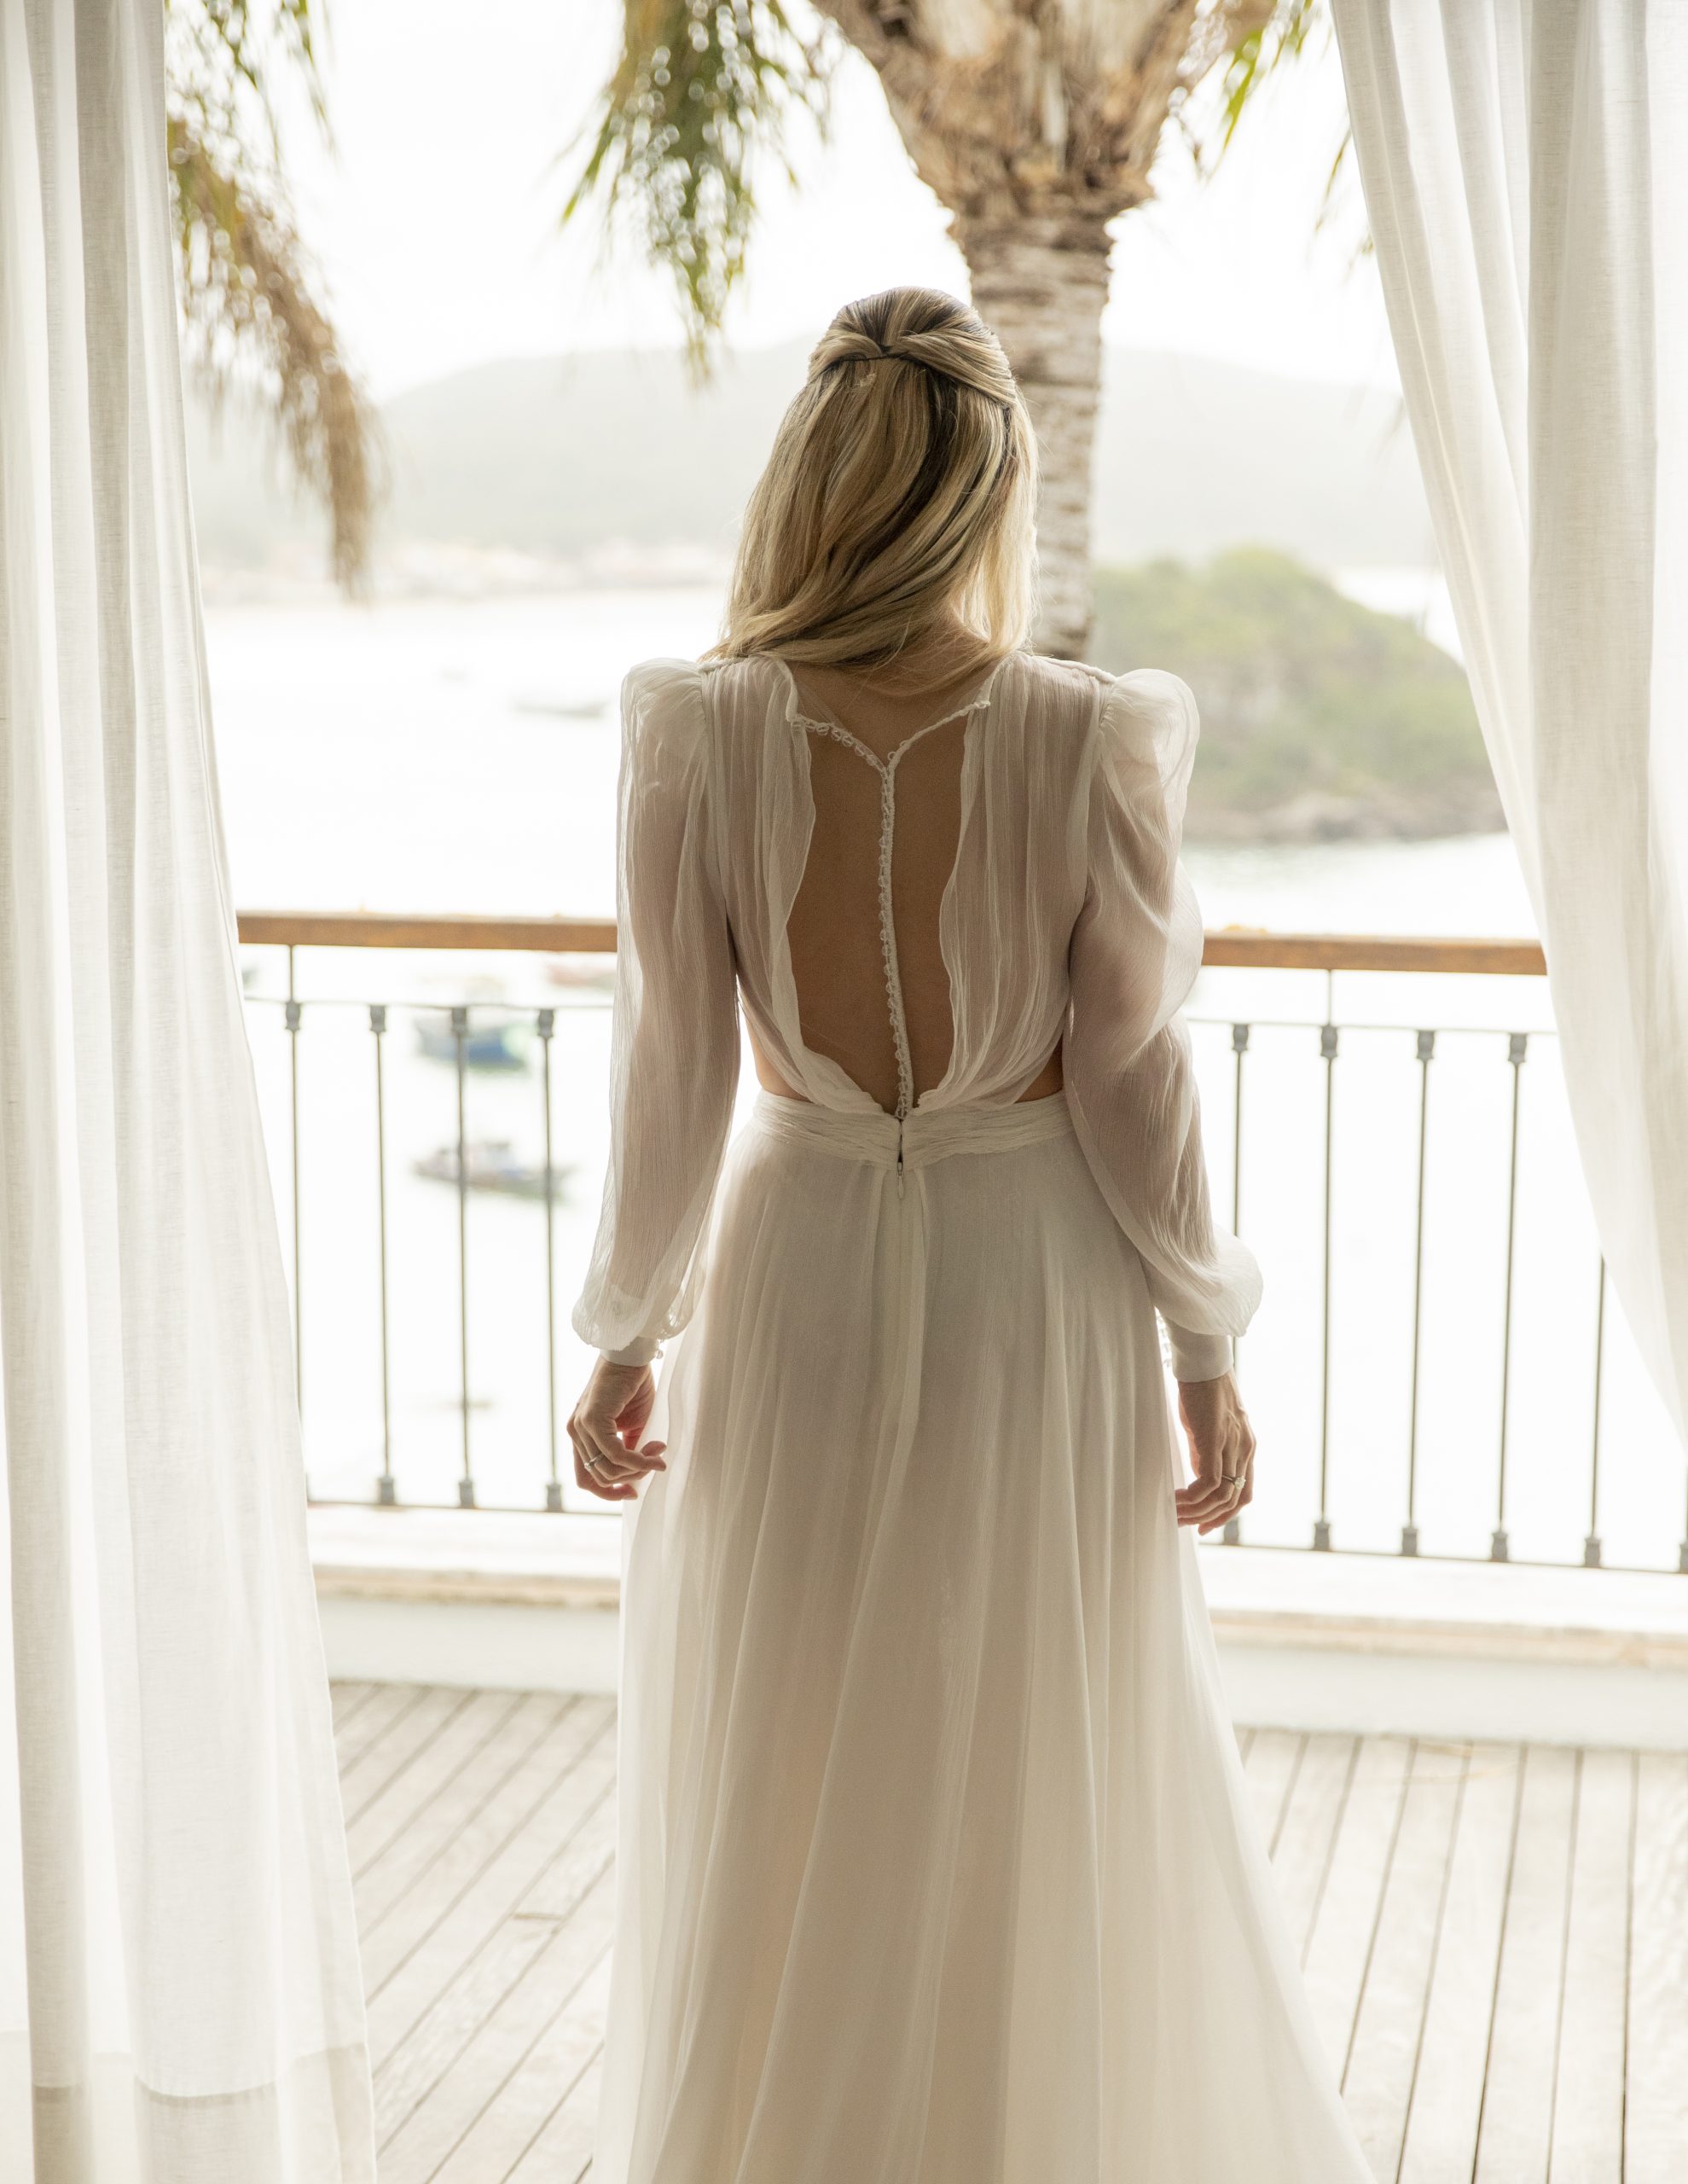 Vestido de noiva clássico e minimalista  | Foto: Rodrigo Sack